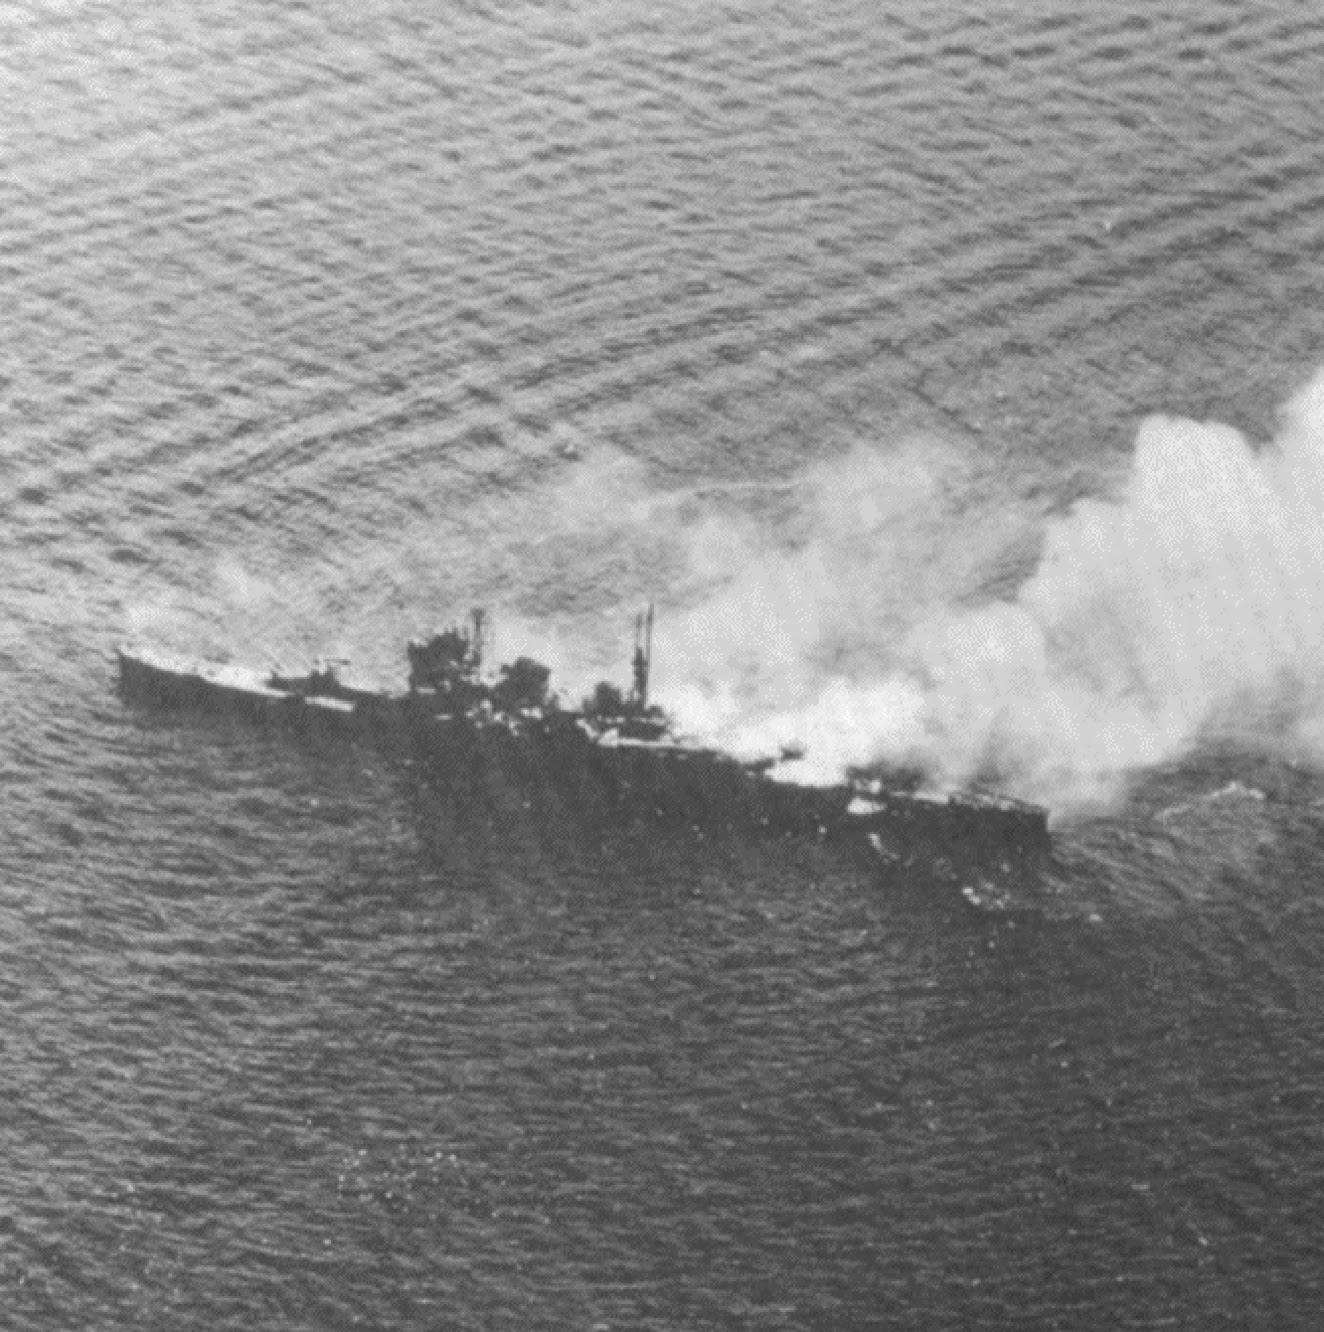 Nachi in Manila Bay, Philippine Islands, 5 Nov 1944